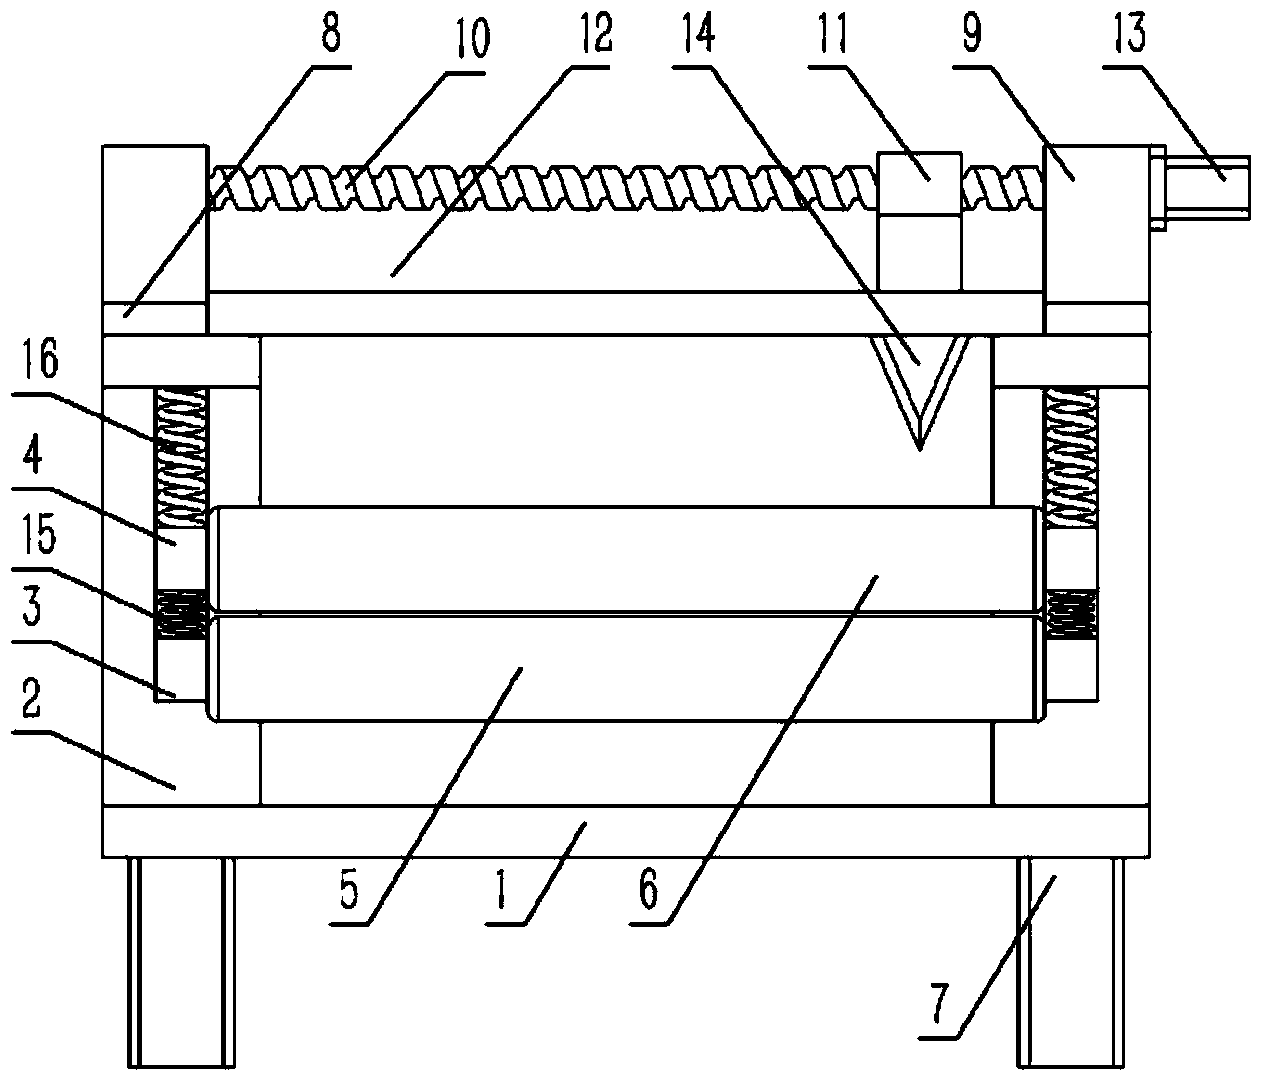 Cloth cutting device of textile machine